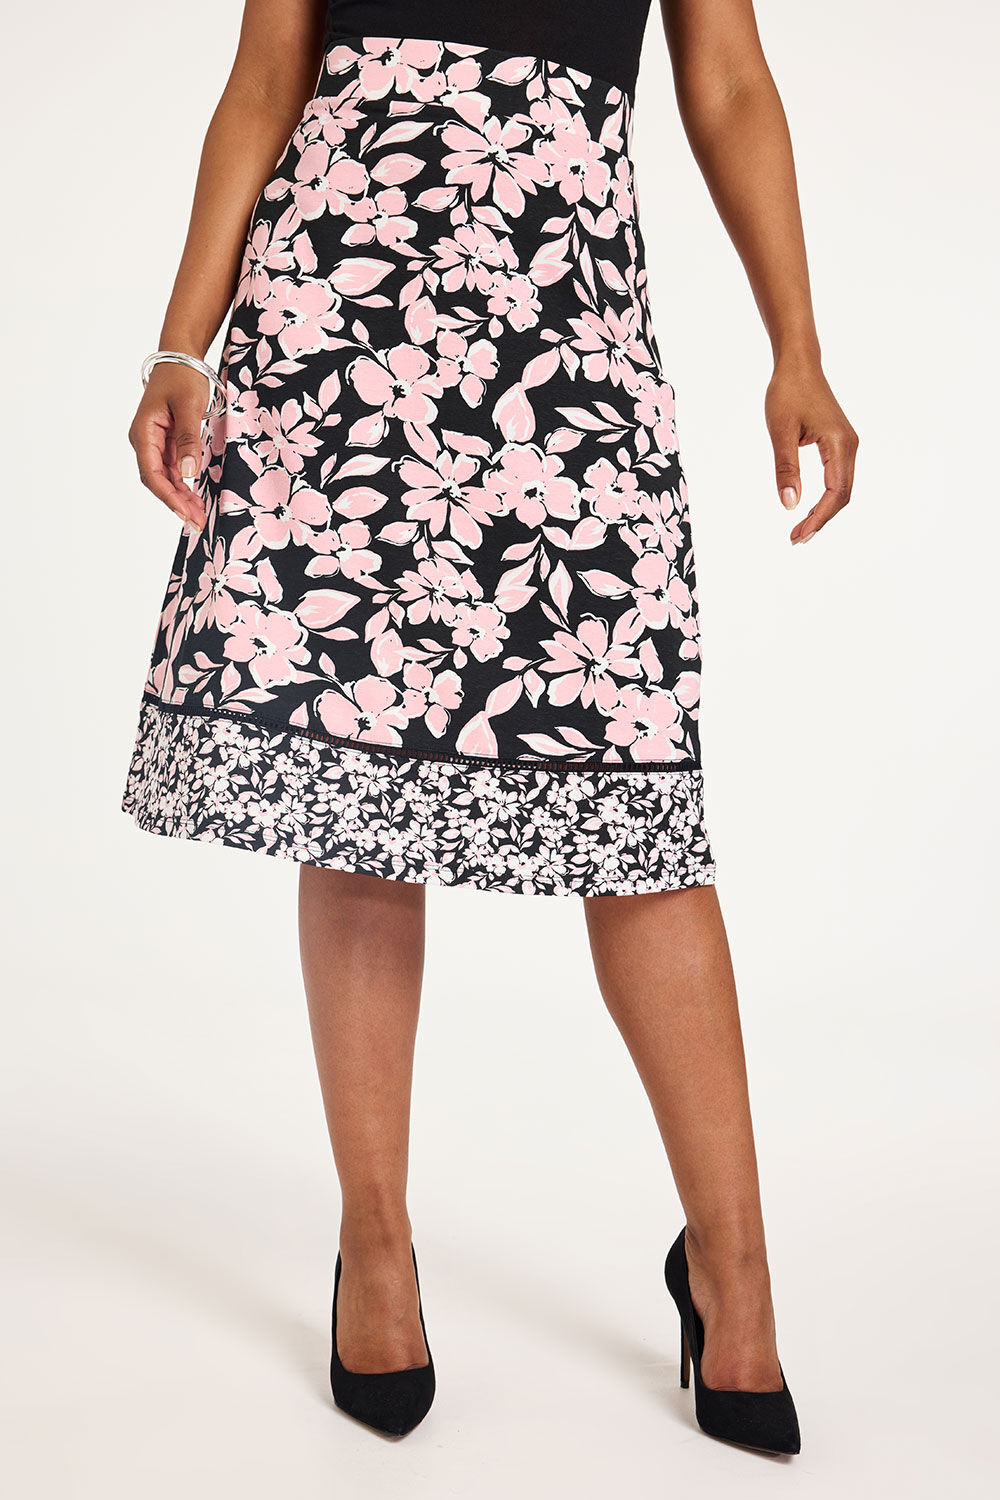 Bonmarche Black Floral Border Print A-Line Jersey Skirt, Size: 18